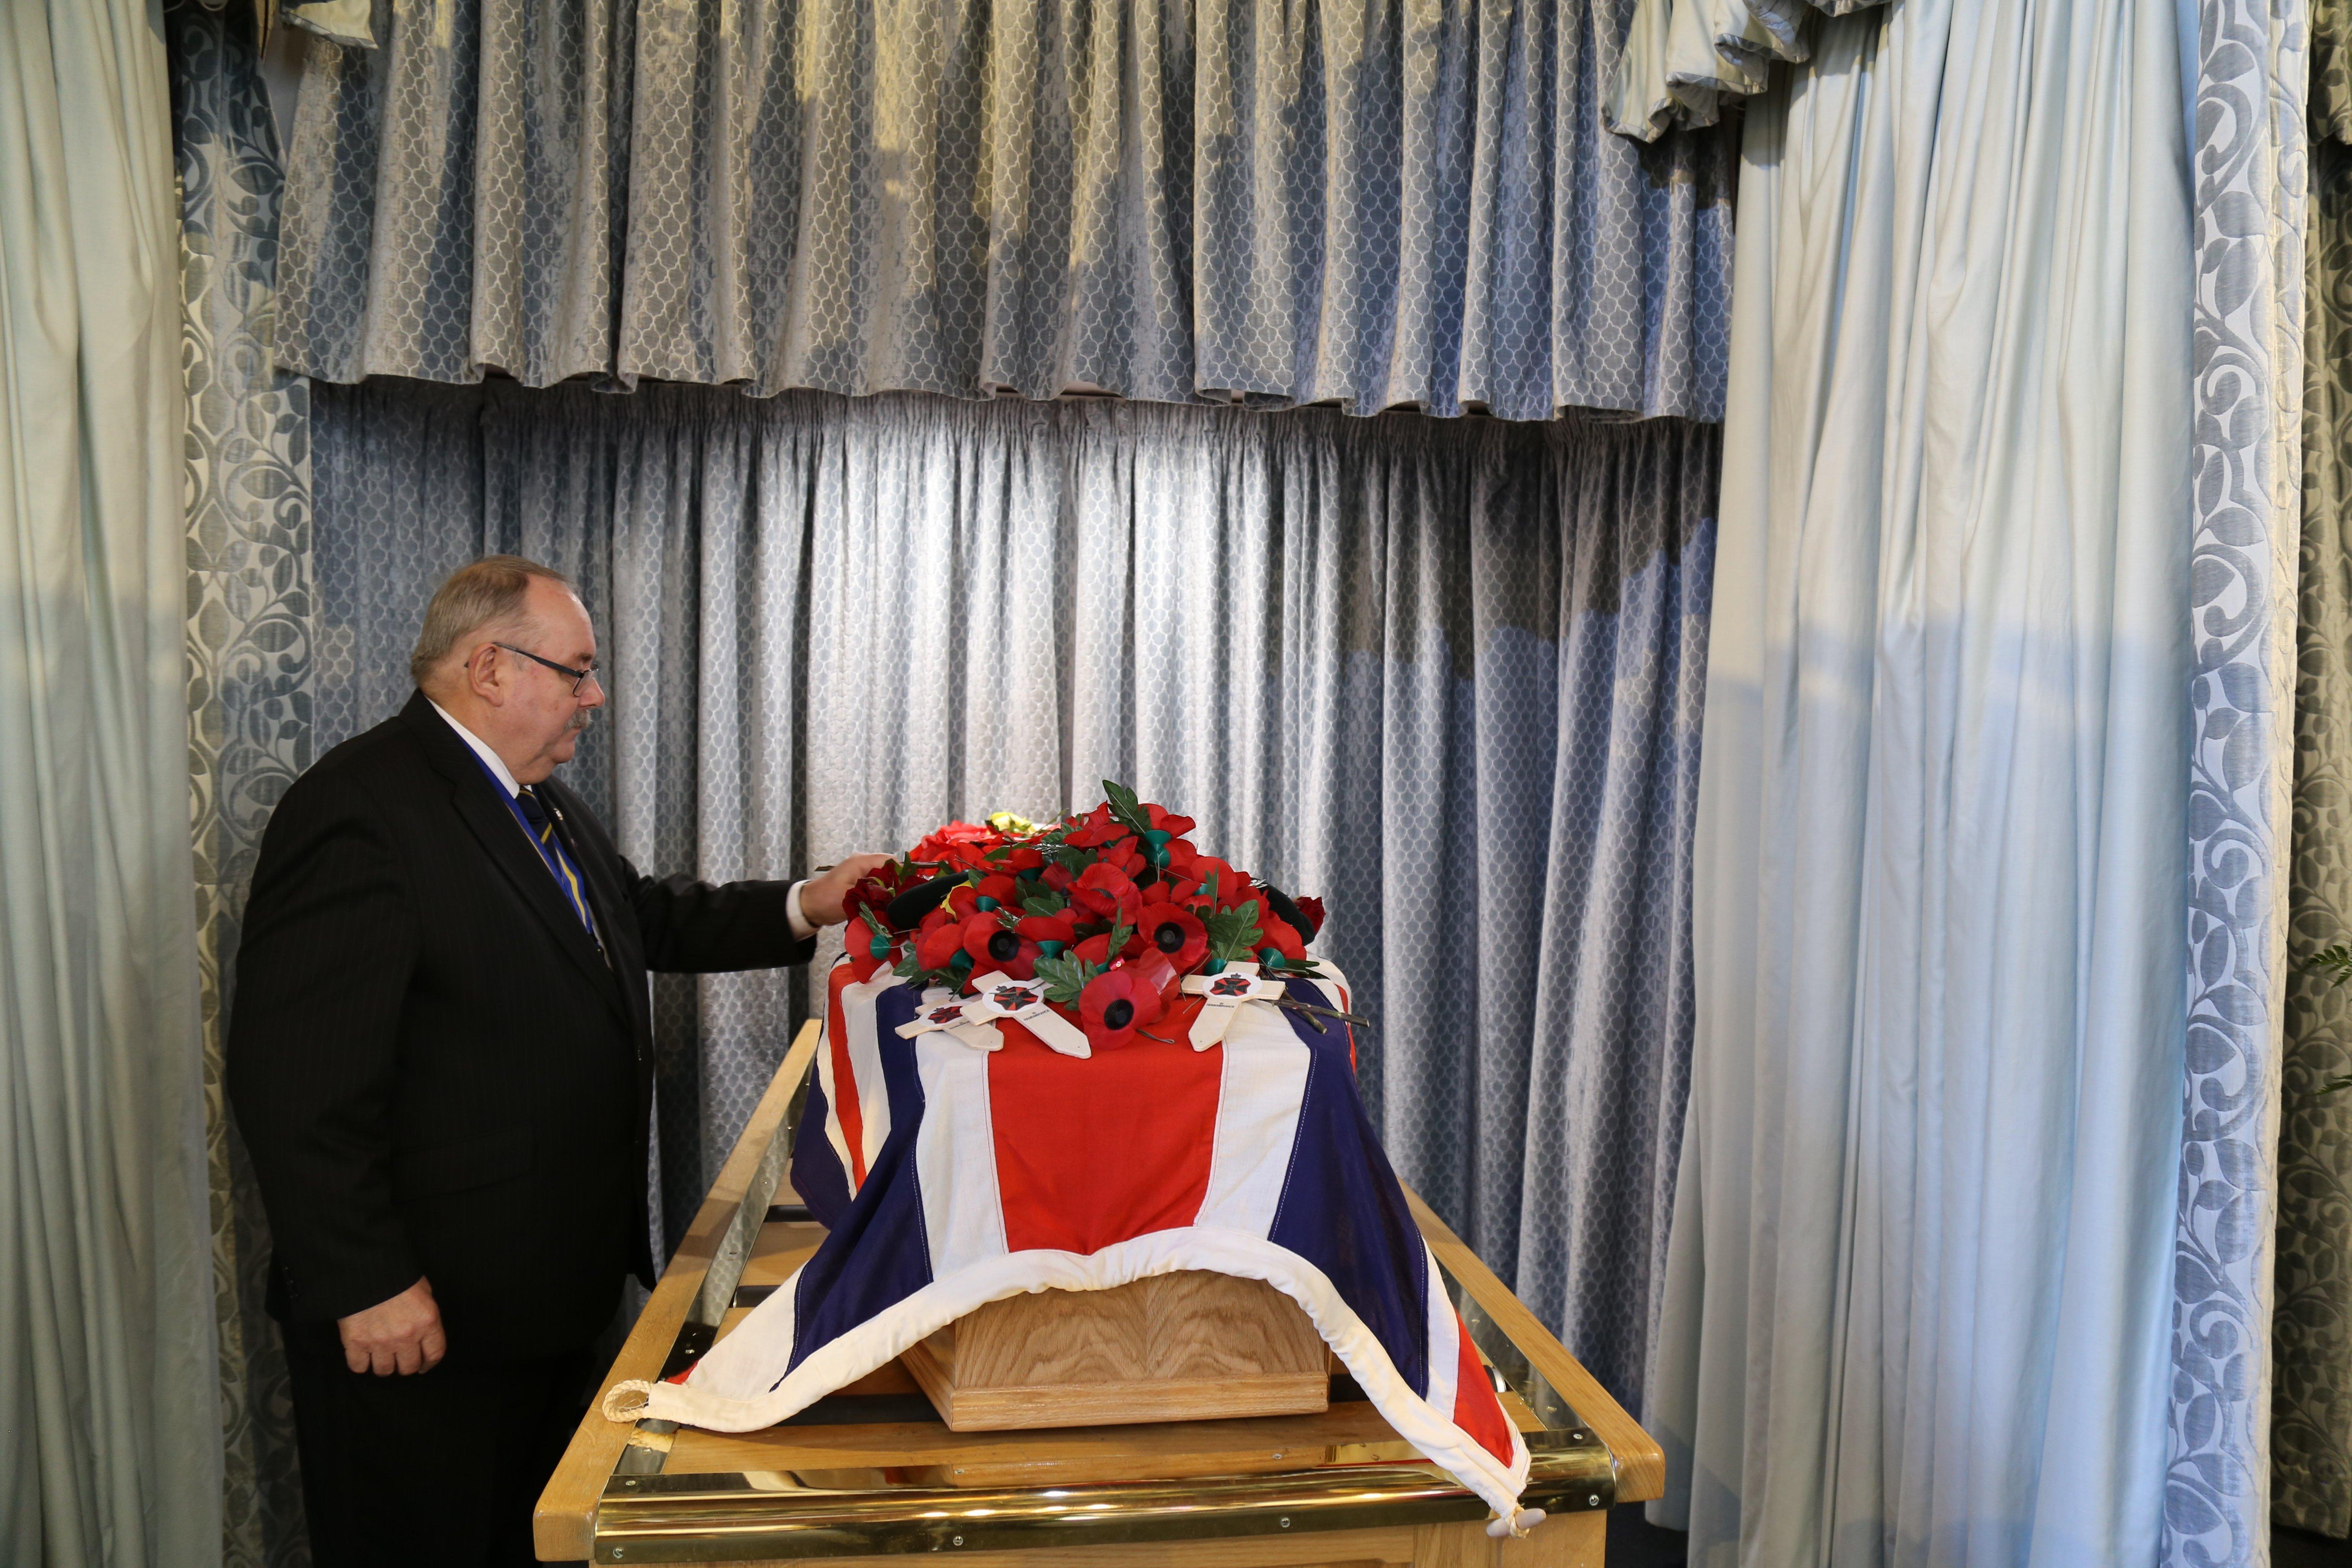 World War Two veteran Don Puttock's funeral